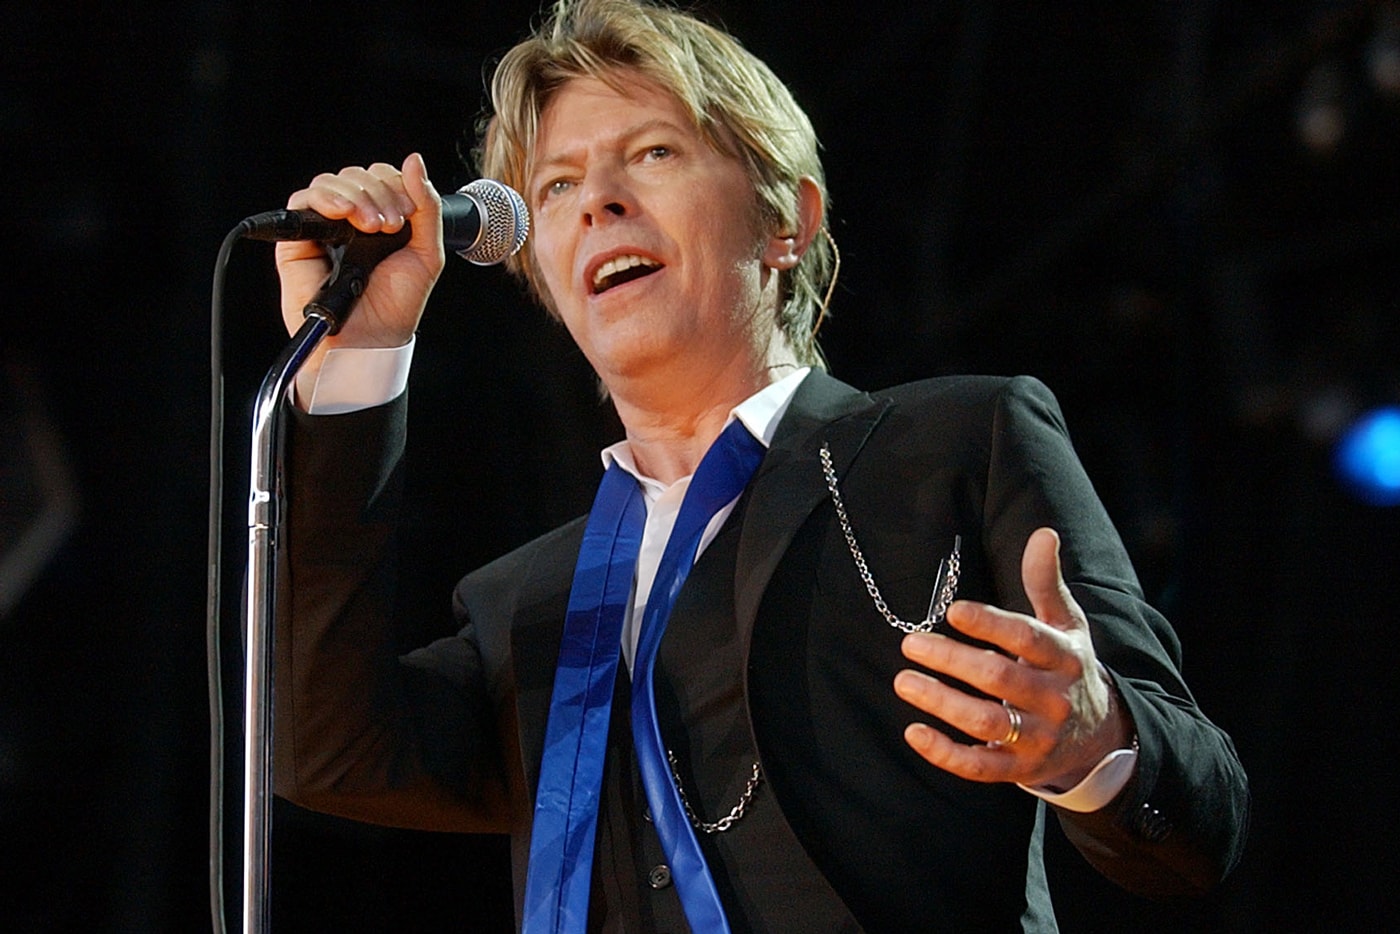 David Bowie The Man Who Fell to Earth Television Series Adaptation nicholas roeg cbs all access alex kurtzman jenny lumet